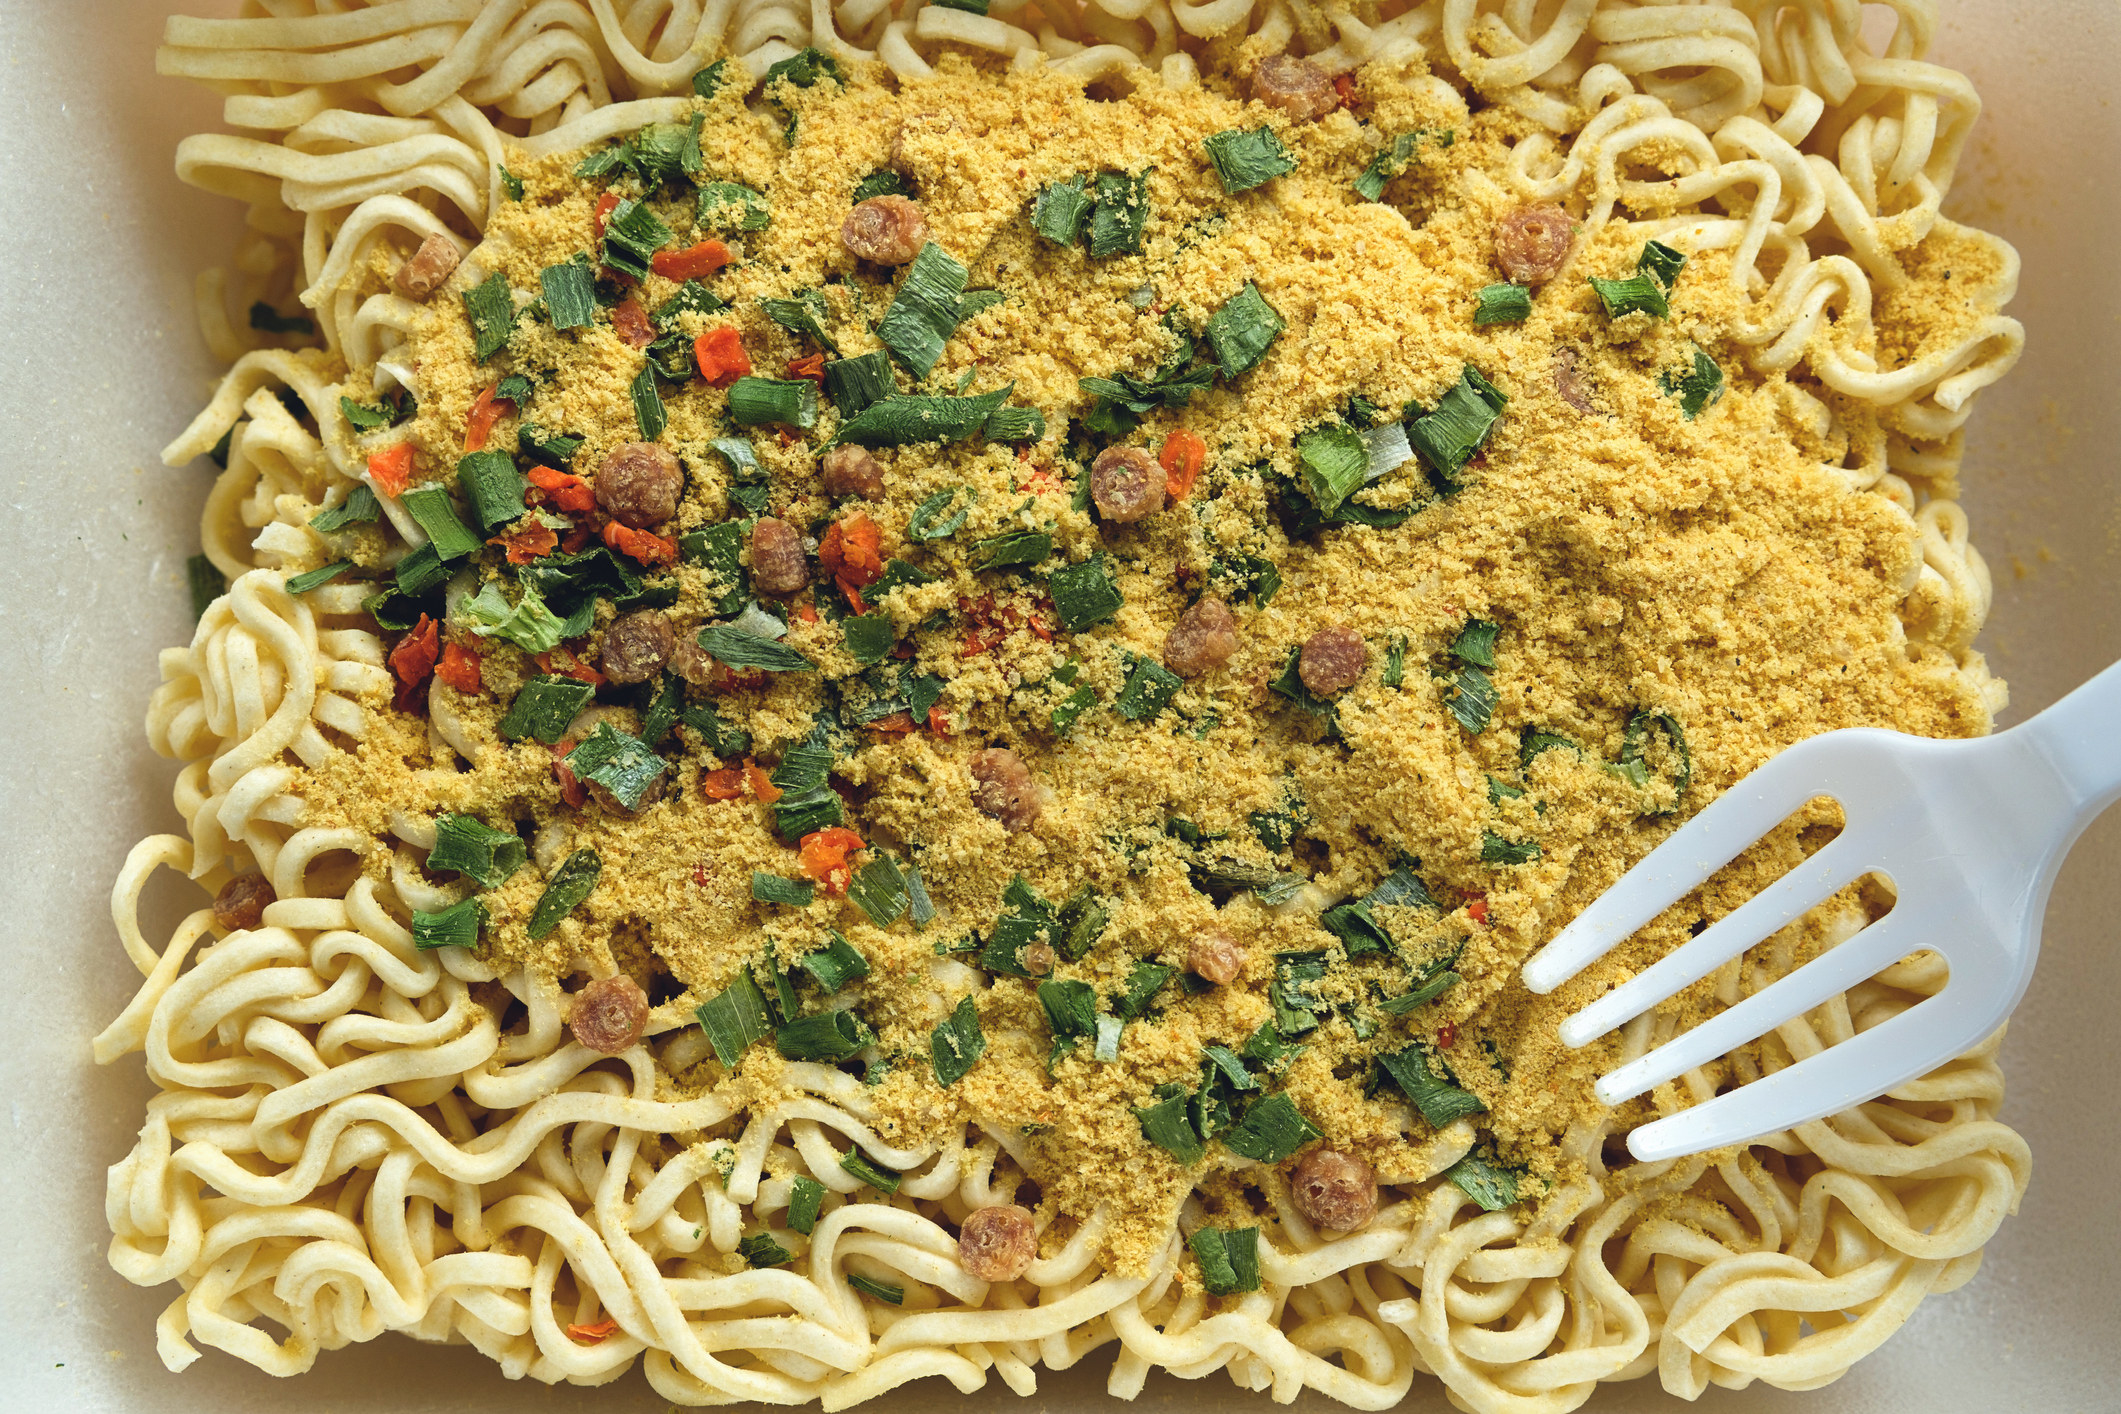 Instant ramen noodles with seasoning